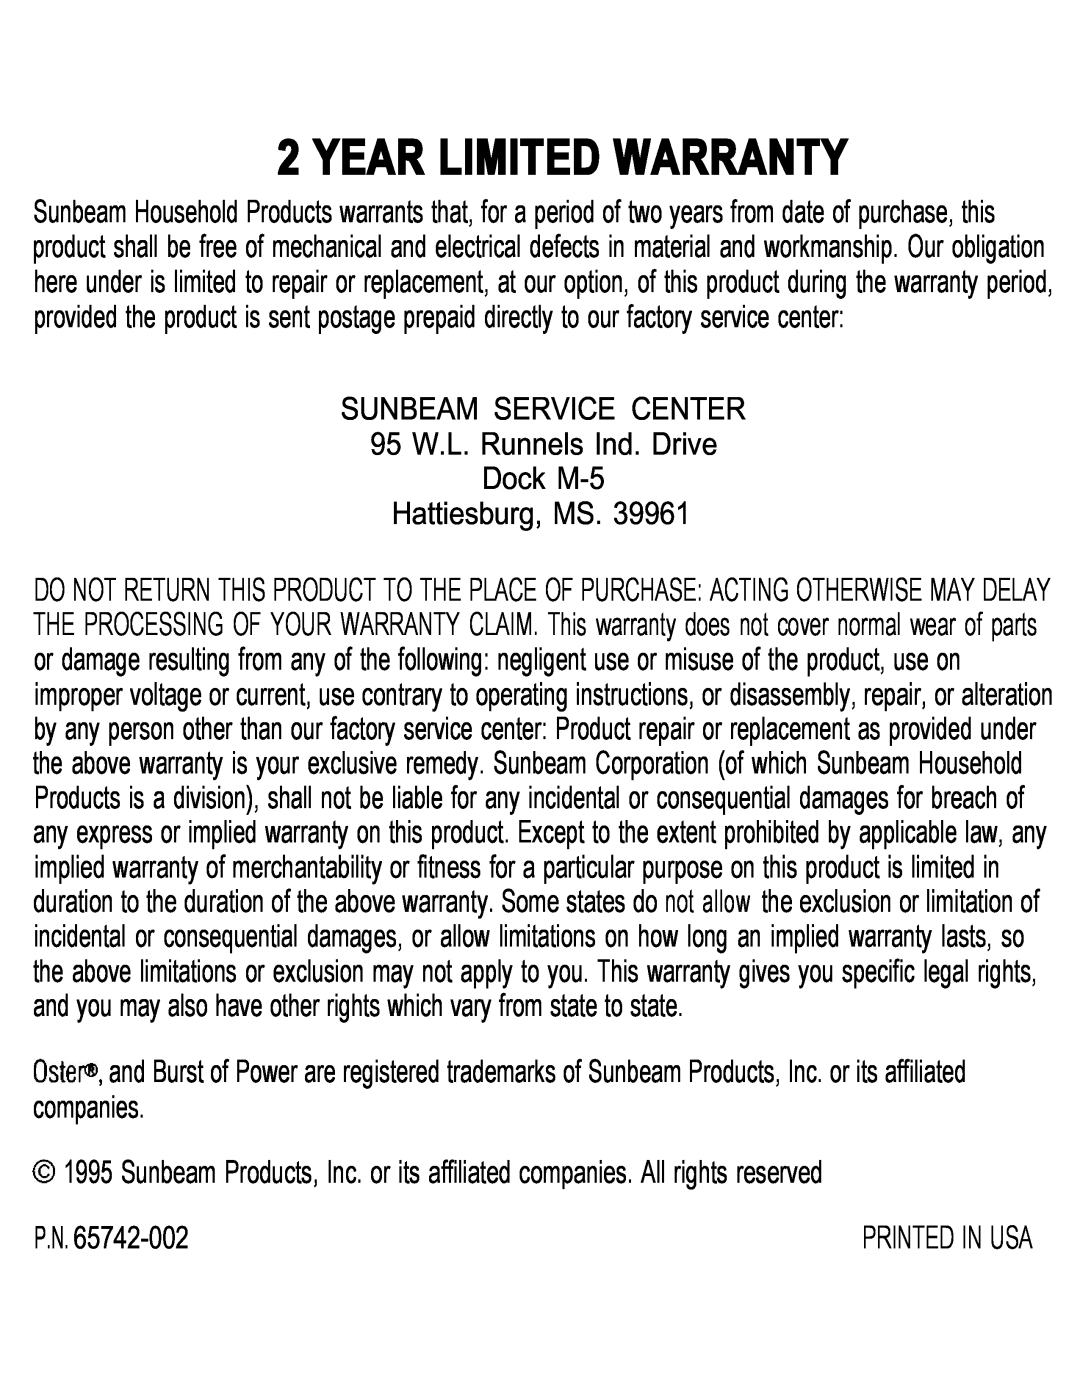 Oster 2382 manual Year Limited Warranty, SUNBEAM SERVICE CENTER 95 W.L. Runnels Ind. Drive, Dock M-5 Hattiesburg, MS, P.N 